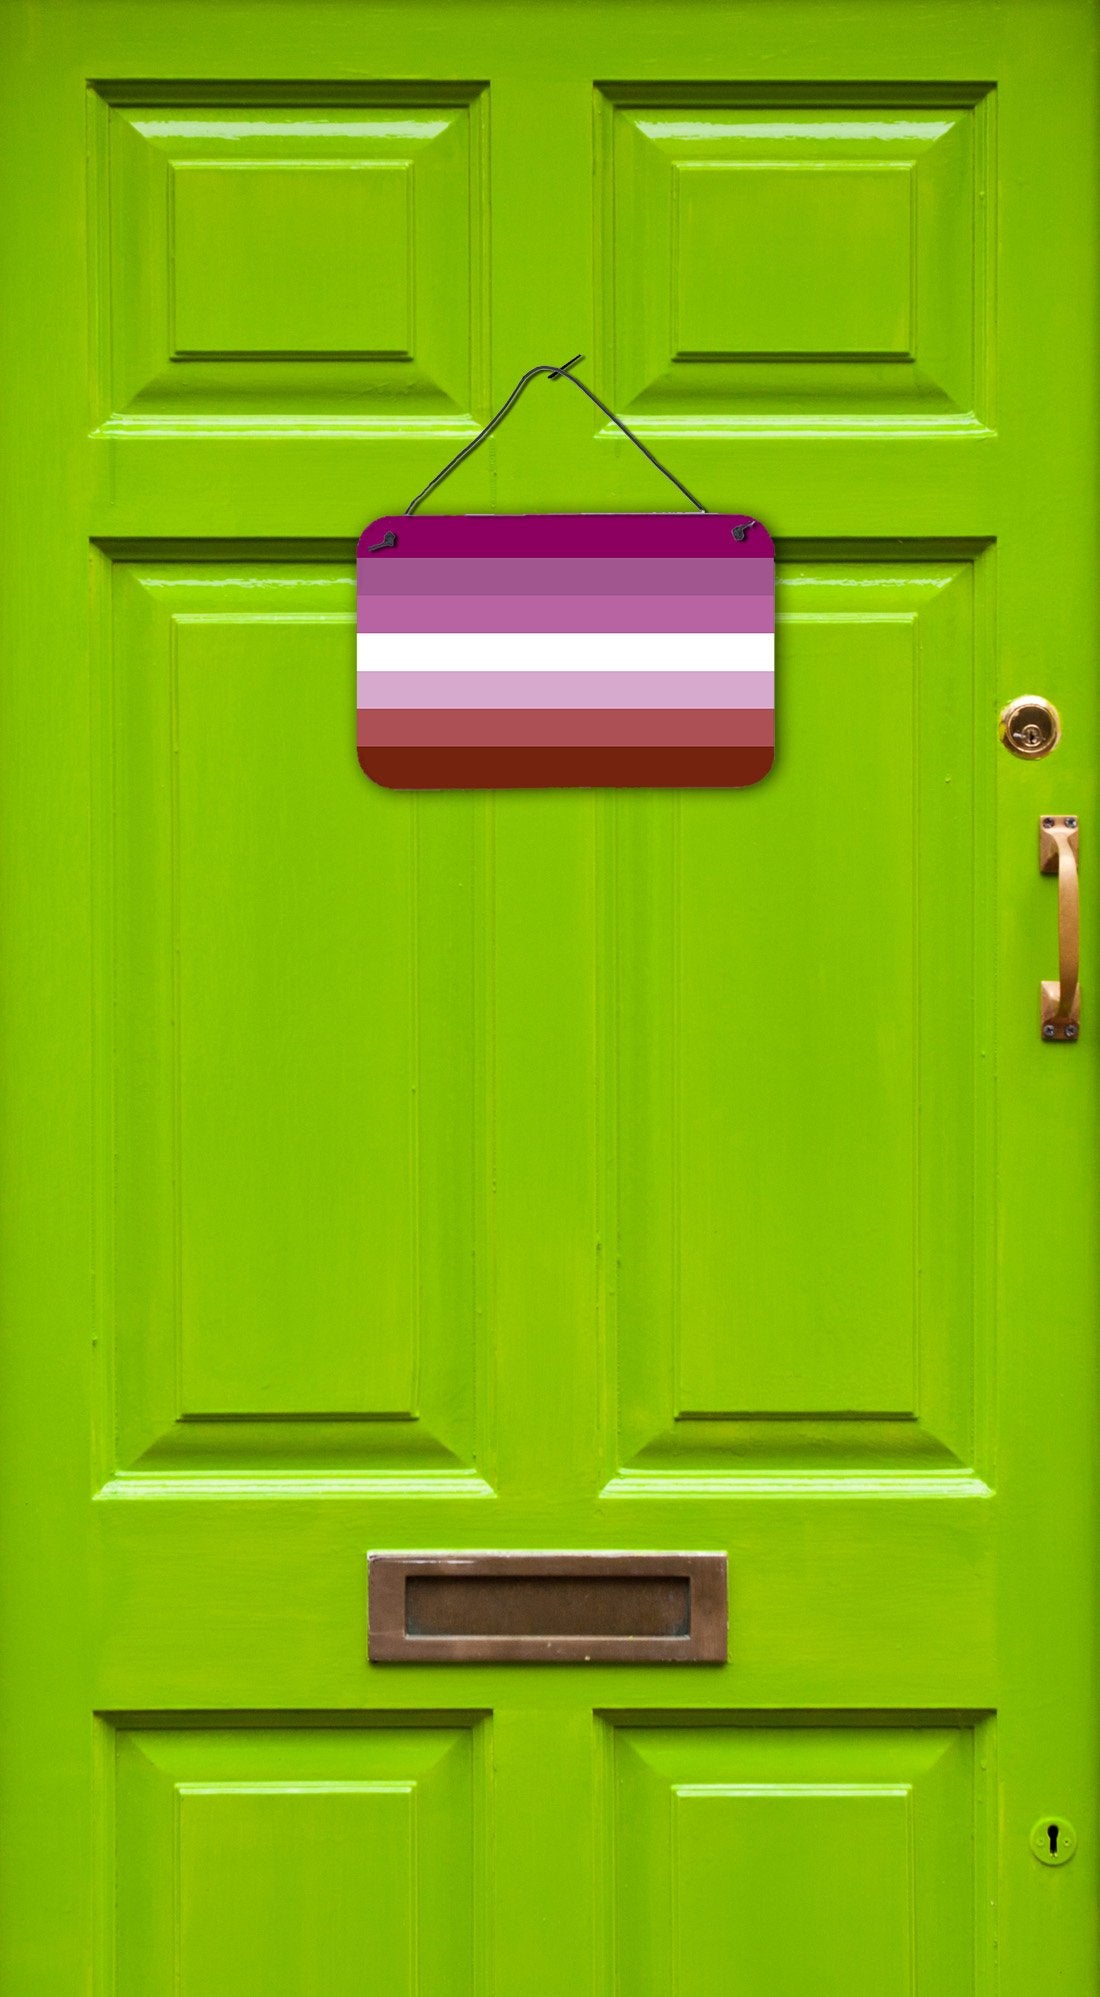 Lesbian Pride Wall or Door Hanging Prints - the-store.com